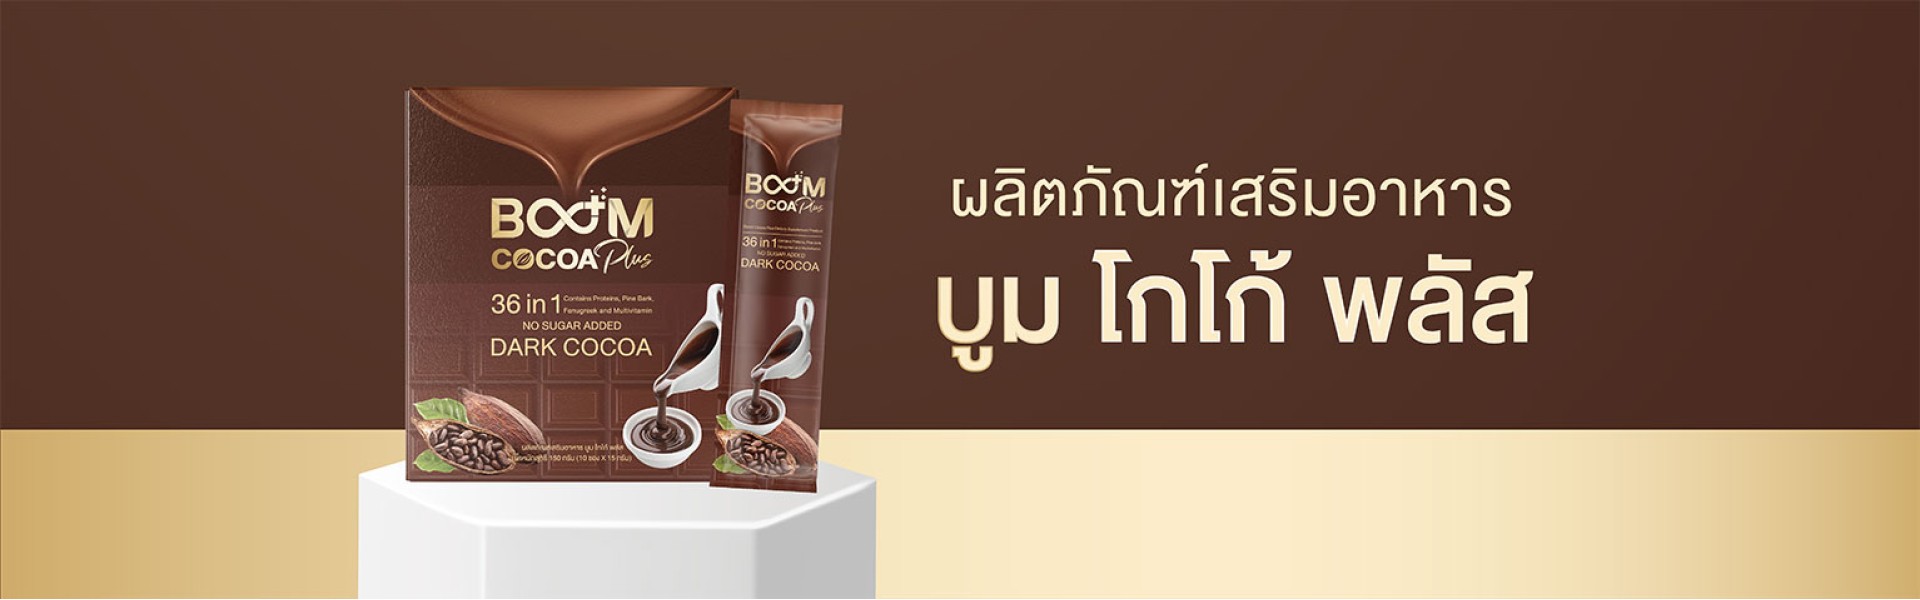 Product - Boom Cocoa Plus